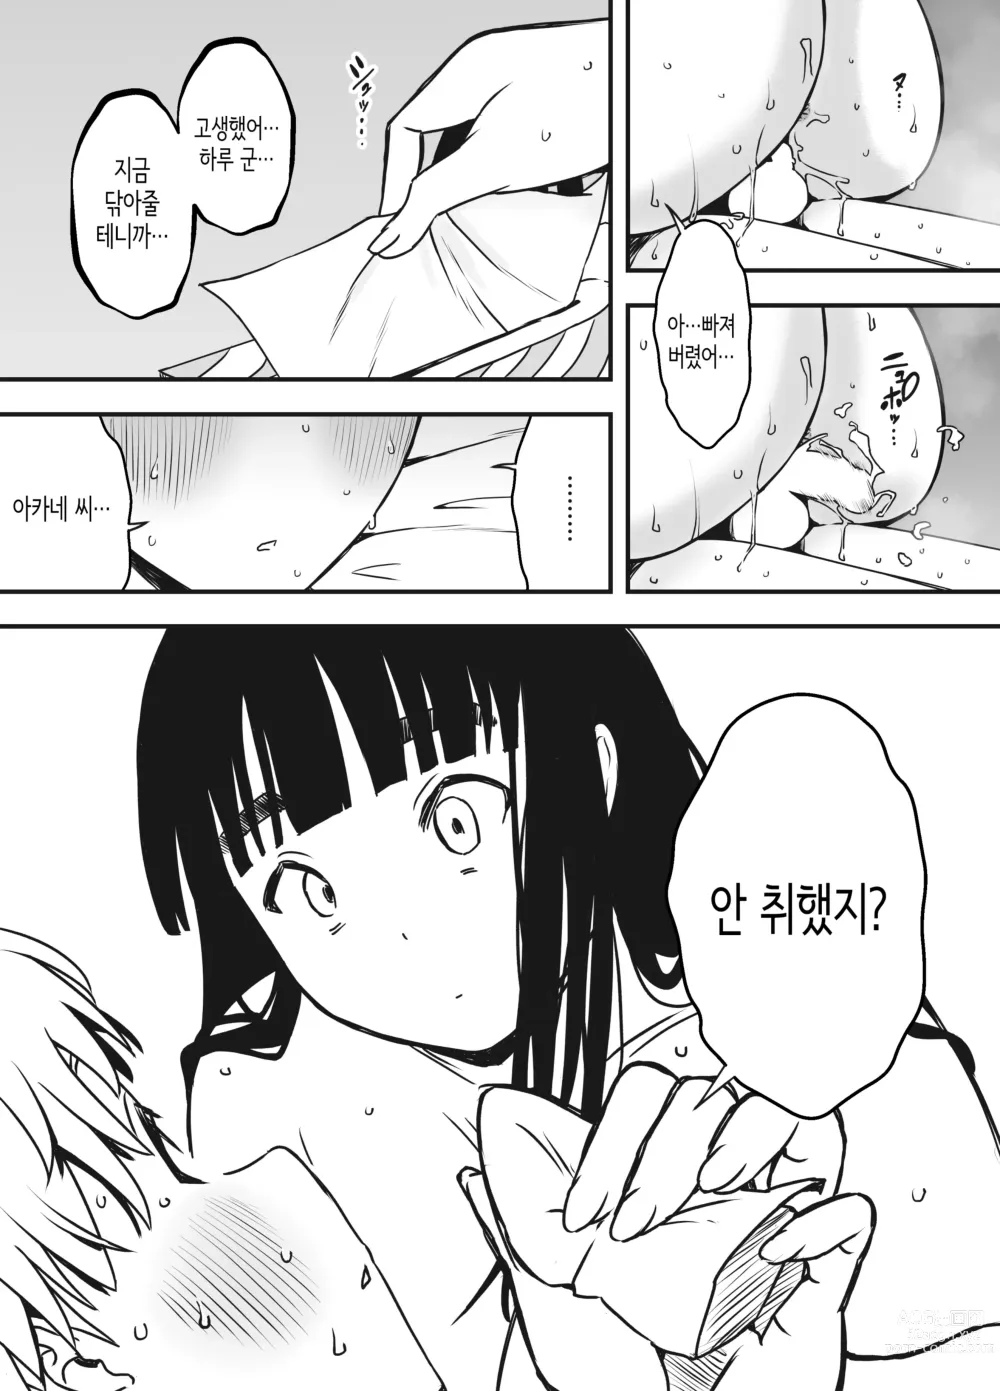 Page 29 of doujinshi 의붓 누나와의 7일간 생활 5